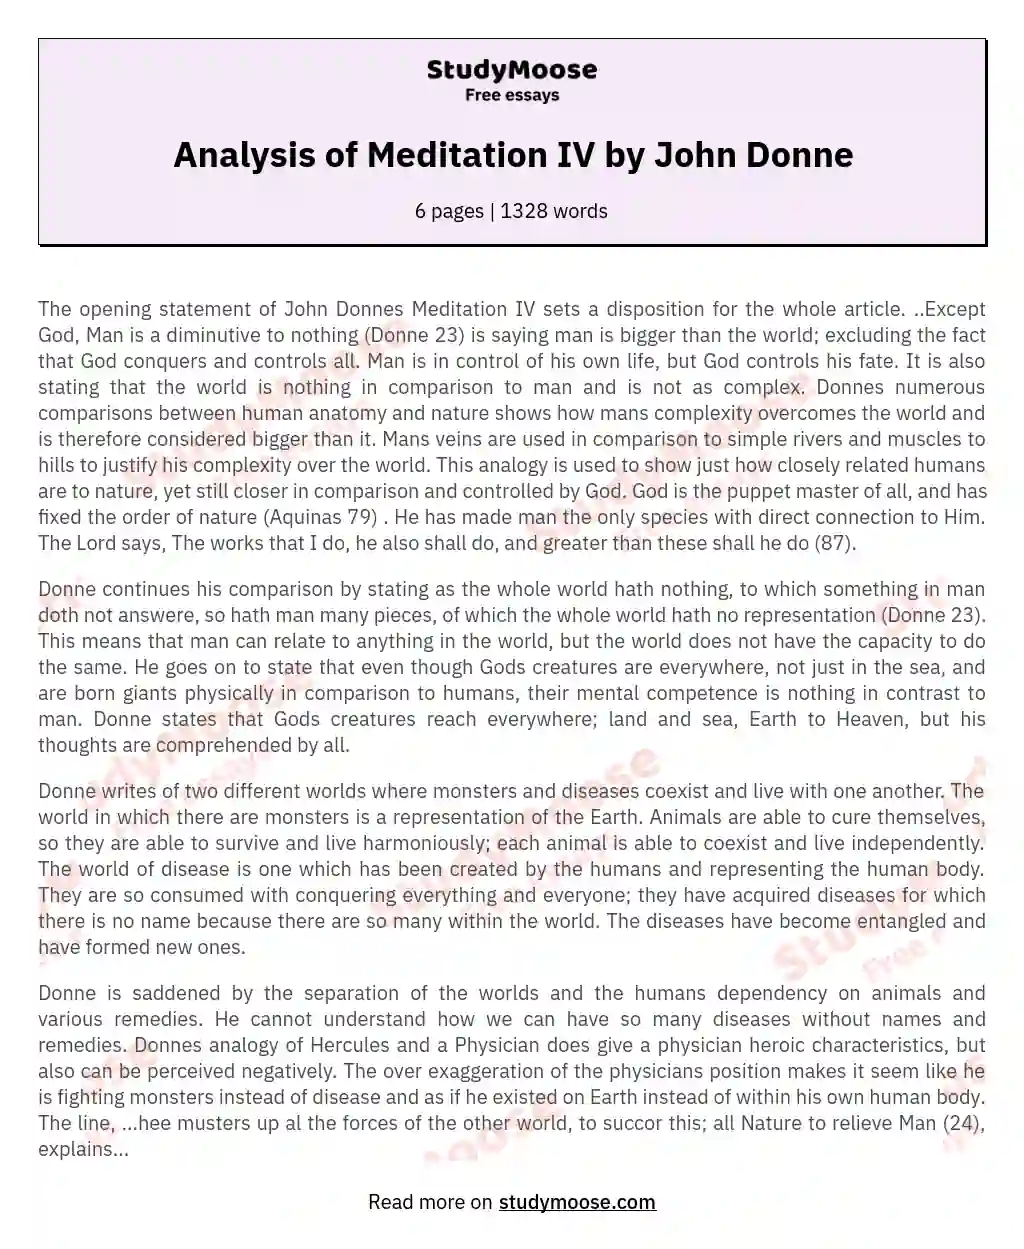 Analysis of Meditation IV by John Donne essay